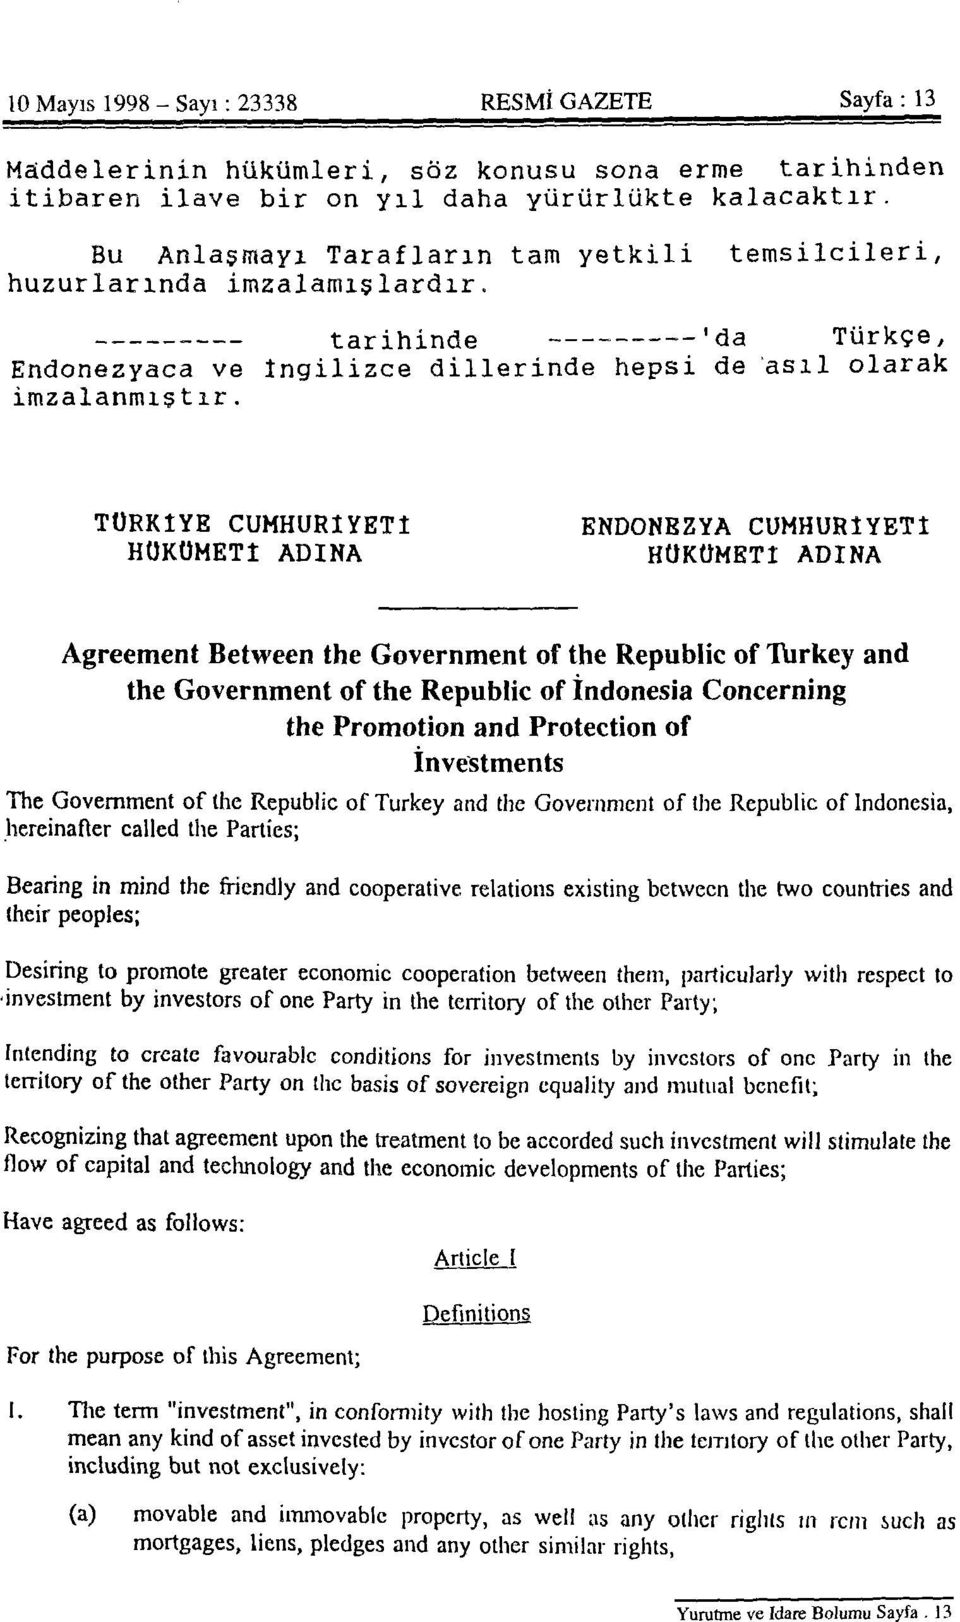 .. TÜRKİYE CUMHURİYETİ HÜKÜMETİ ADINA ENDONEZYA CUMHURİYETİ HÜKÜMETİ ADINA Agreement Between the Government of the Republic of Turkey and the Government of the Republic of Indonesia Concerning the